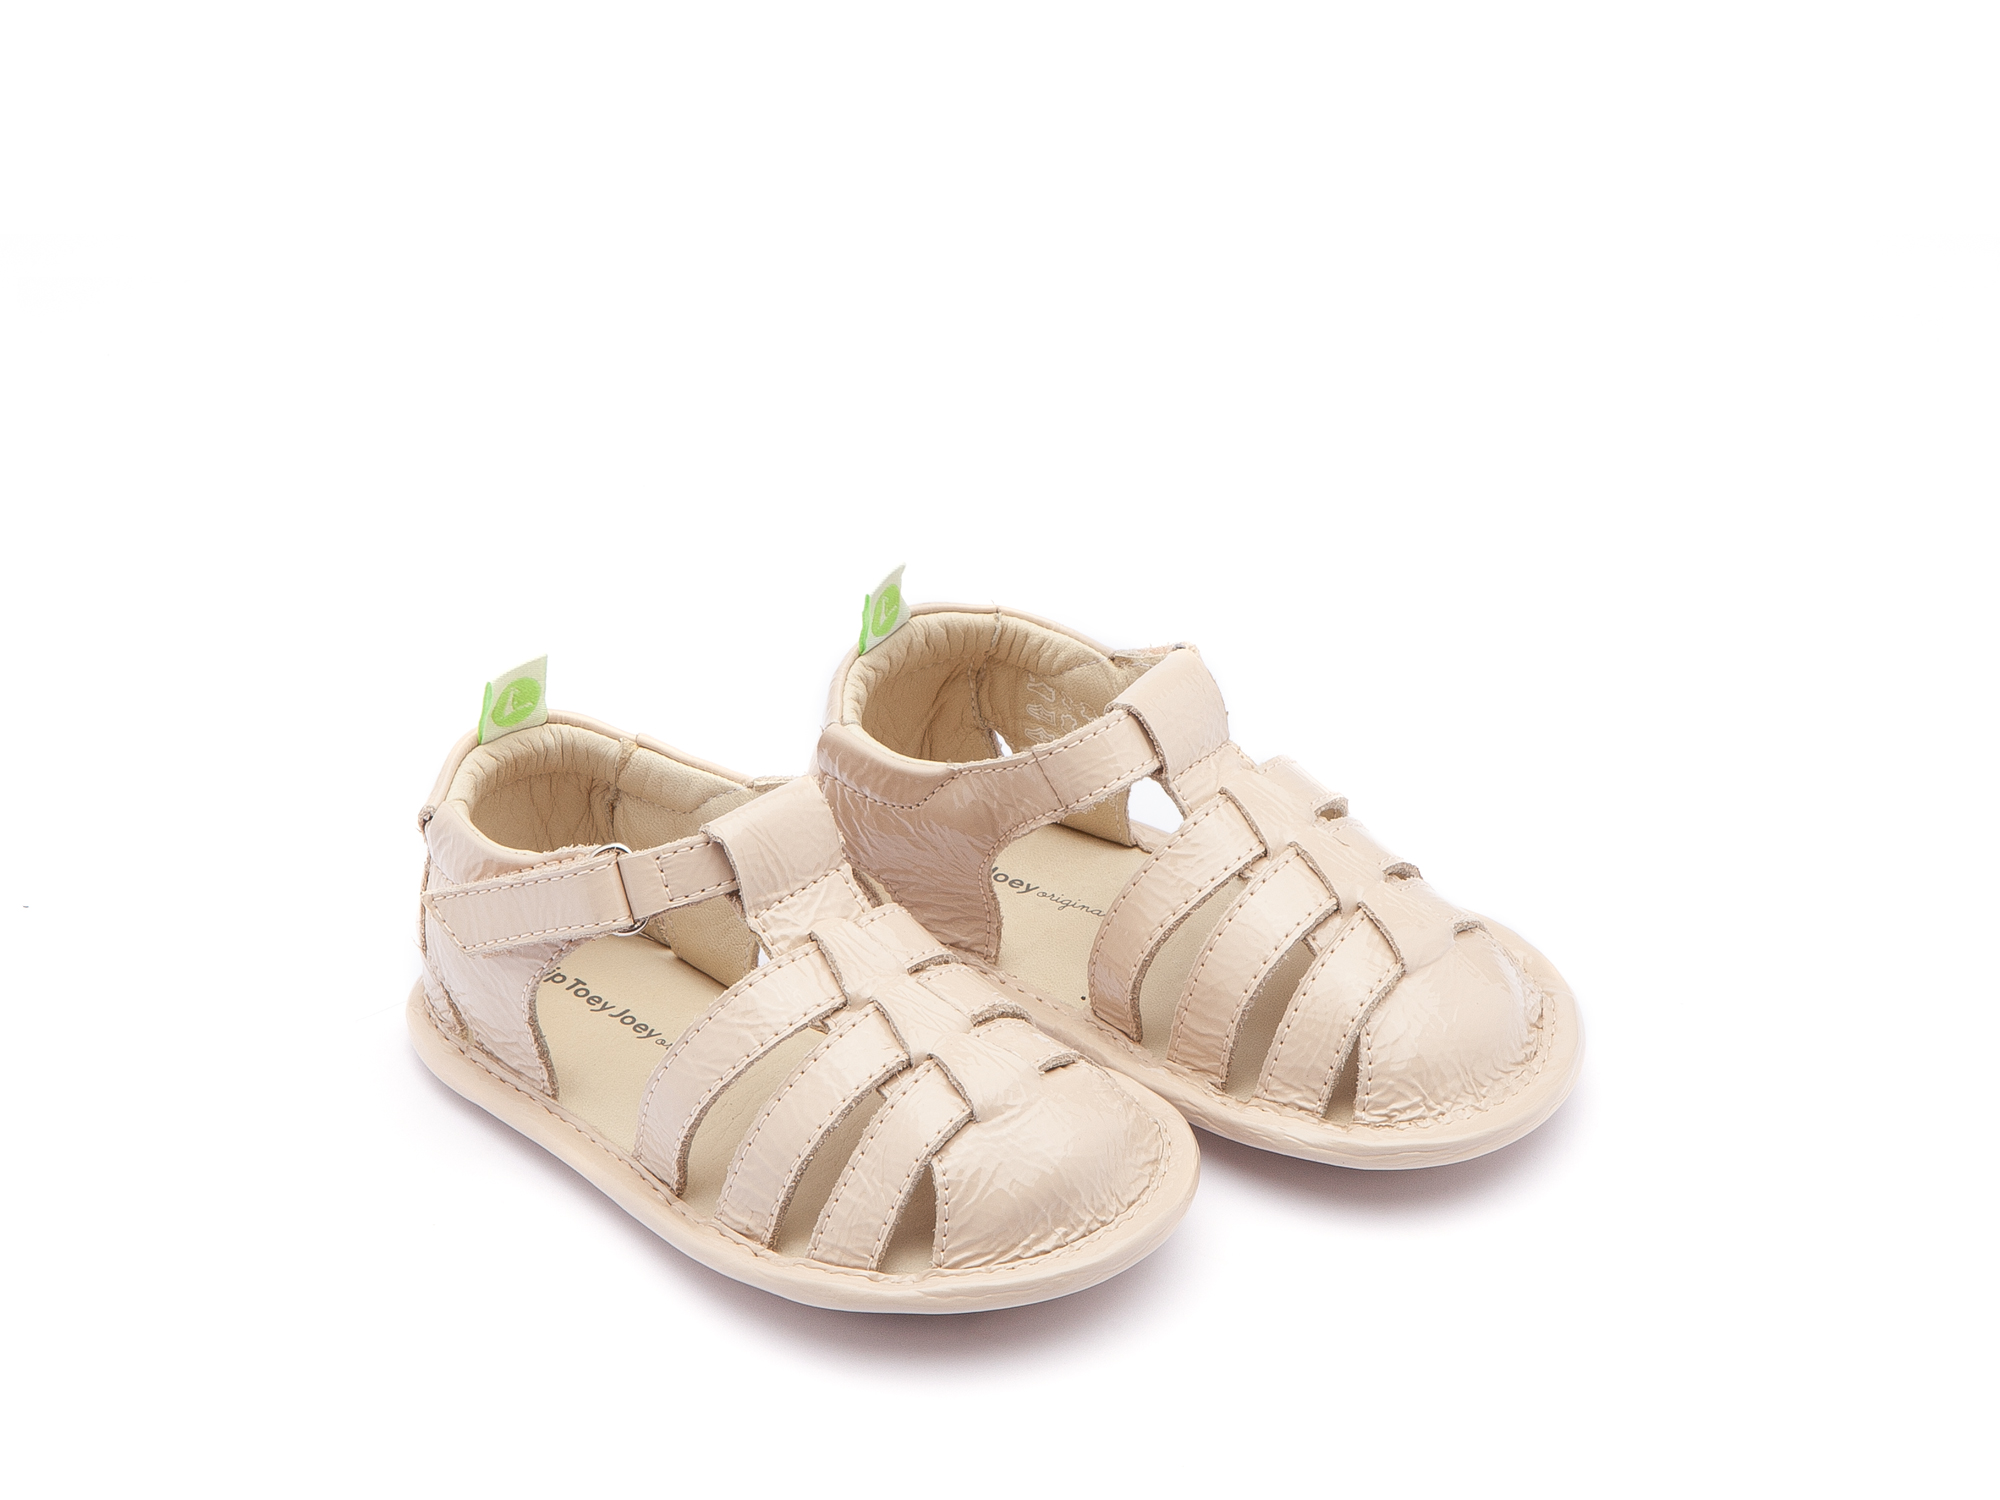 SIT & CRAWL Sandals for Girls Minty | Tip Toey Joey - Australia - 0